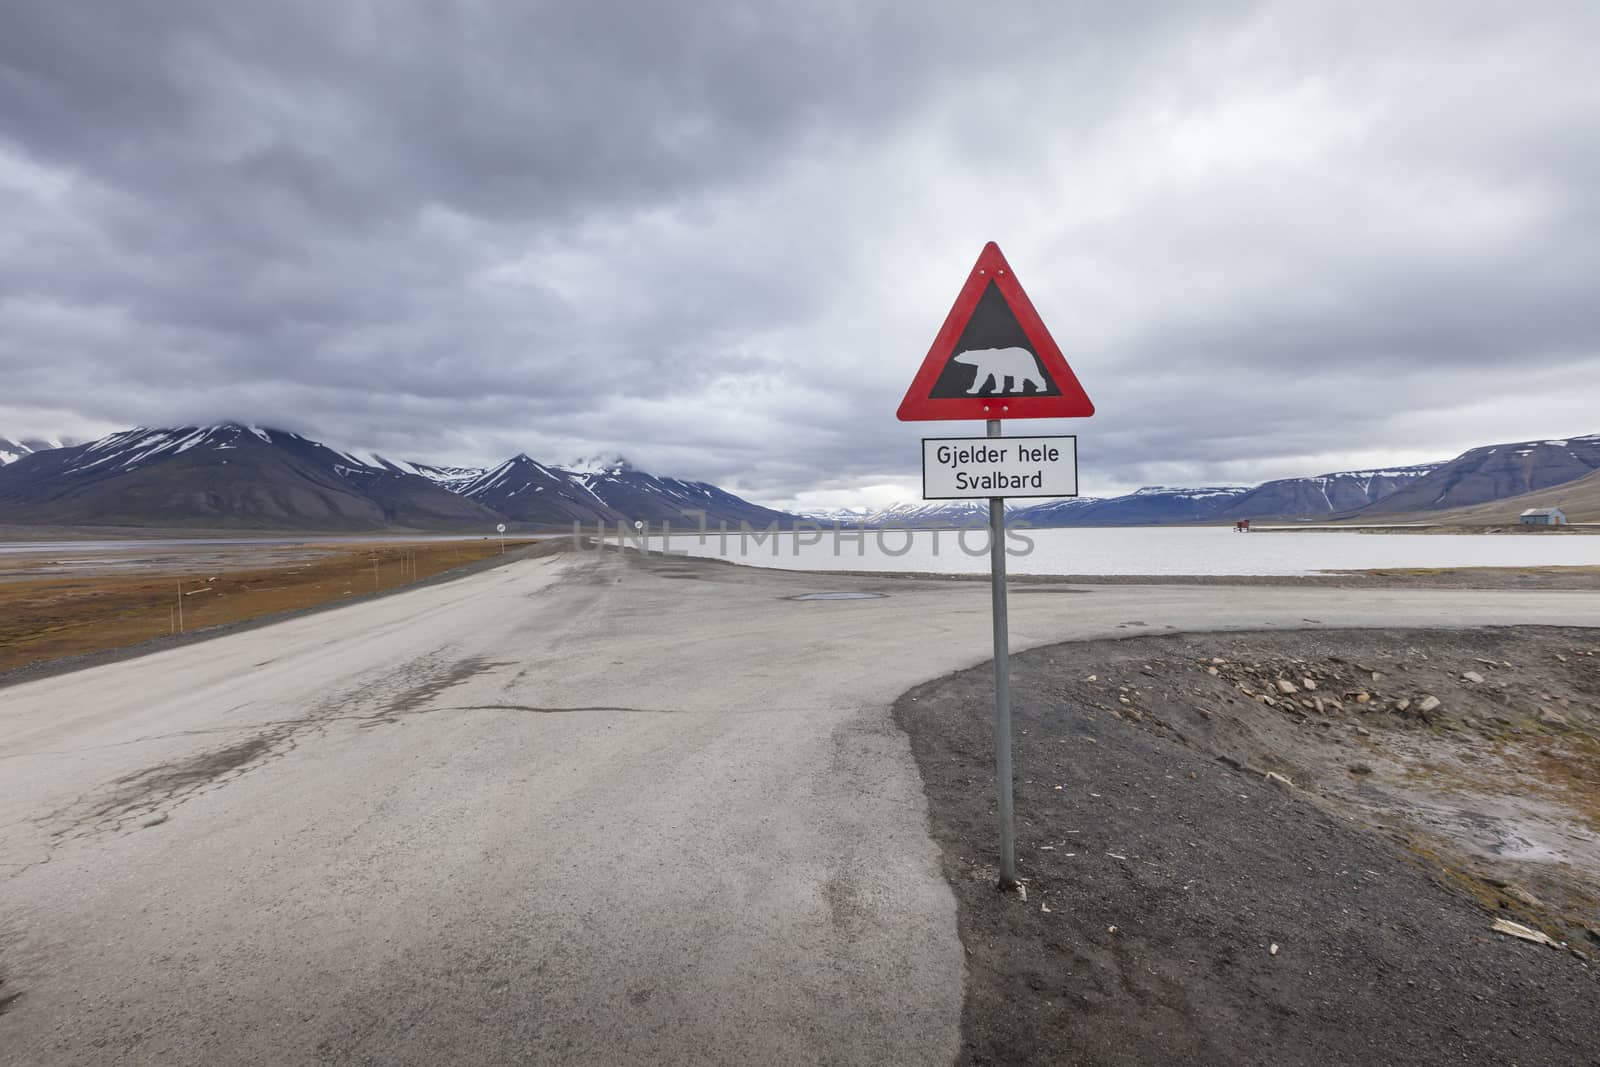 Warning sign polar bears, Spitsbergen, Svalbard, Norway

